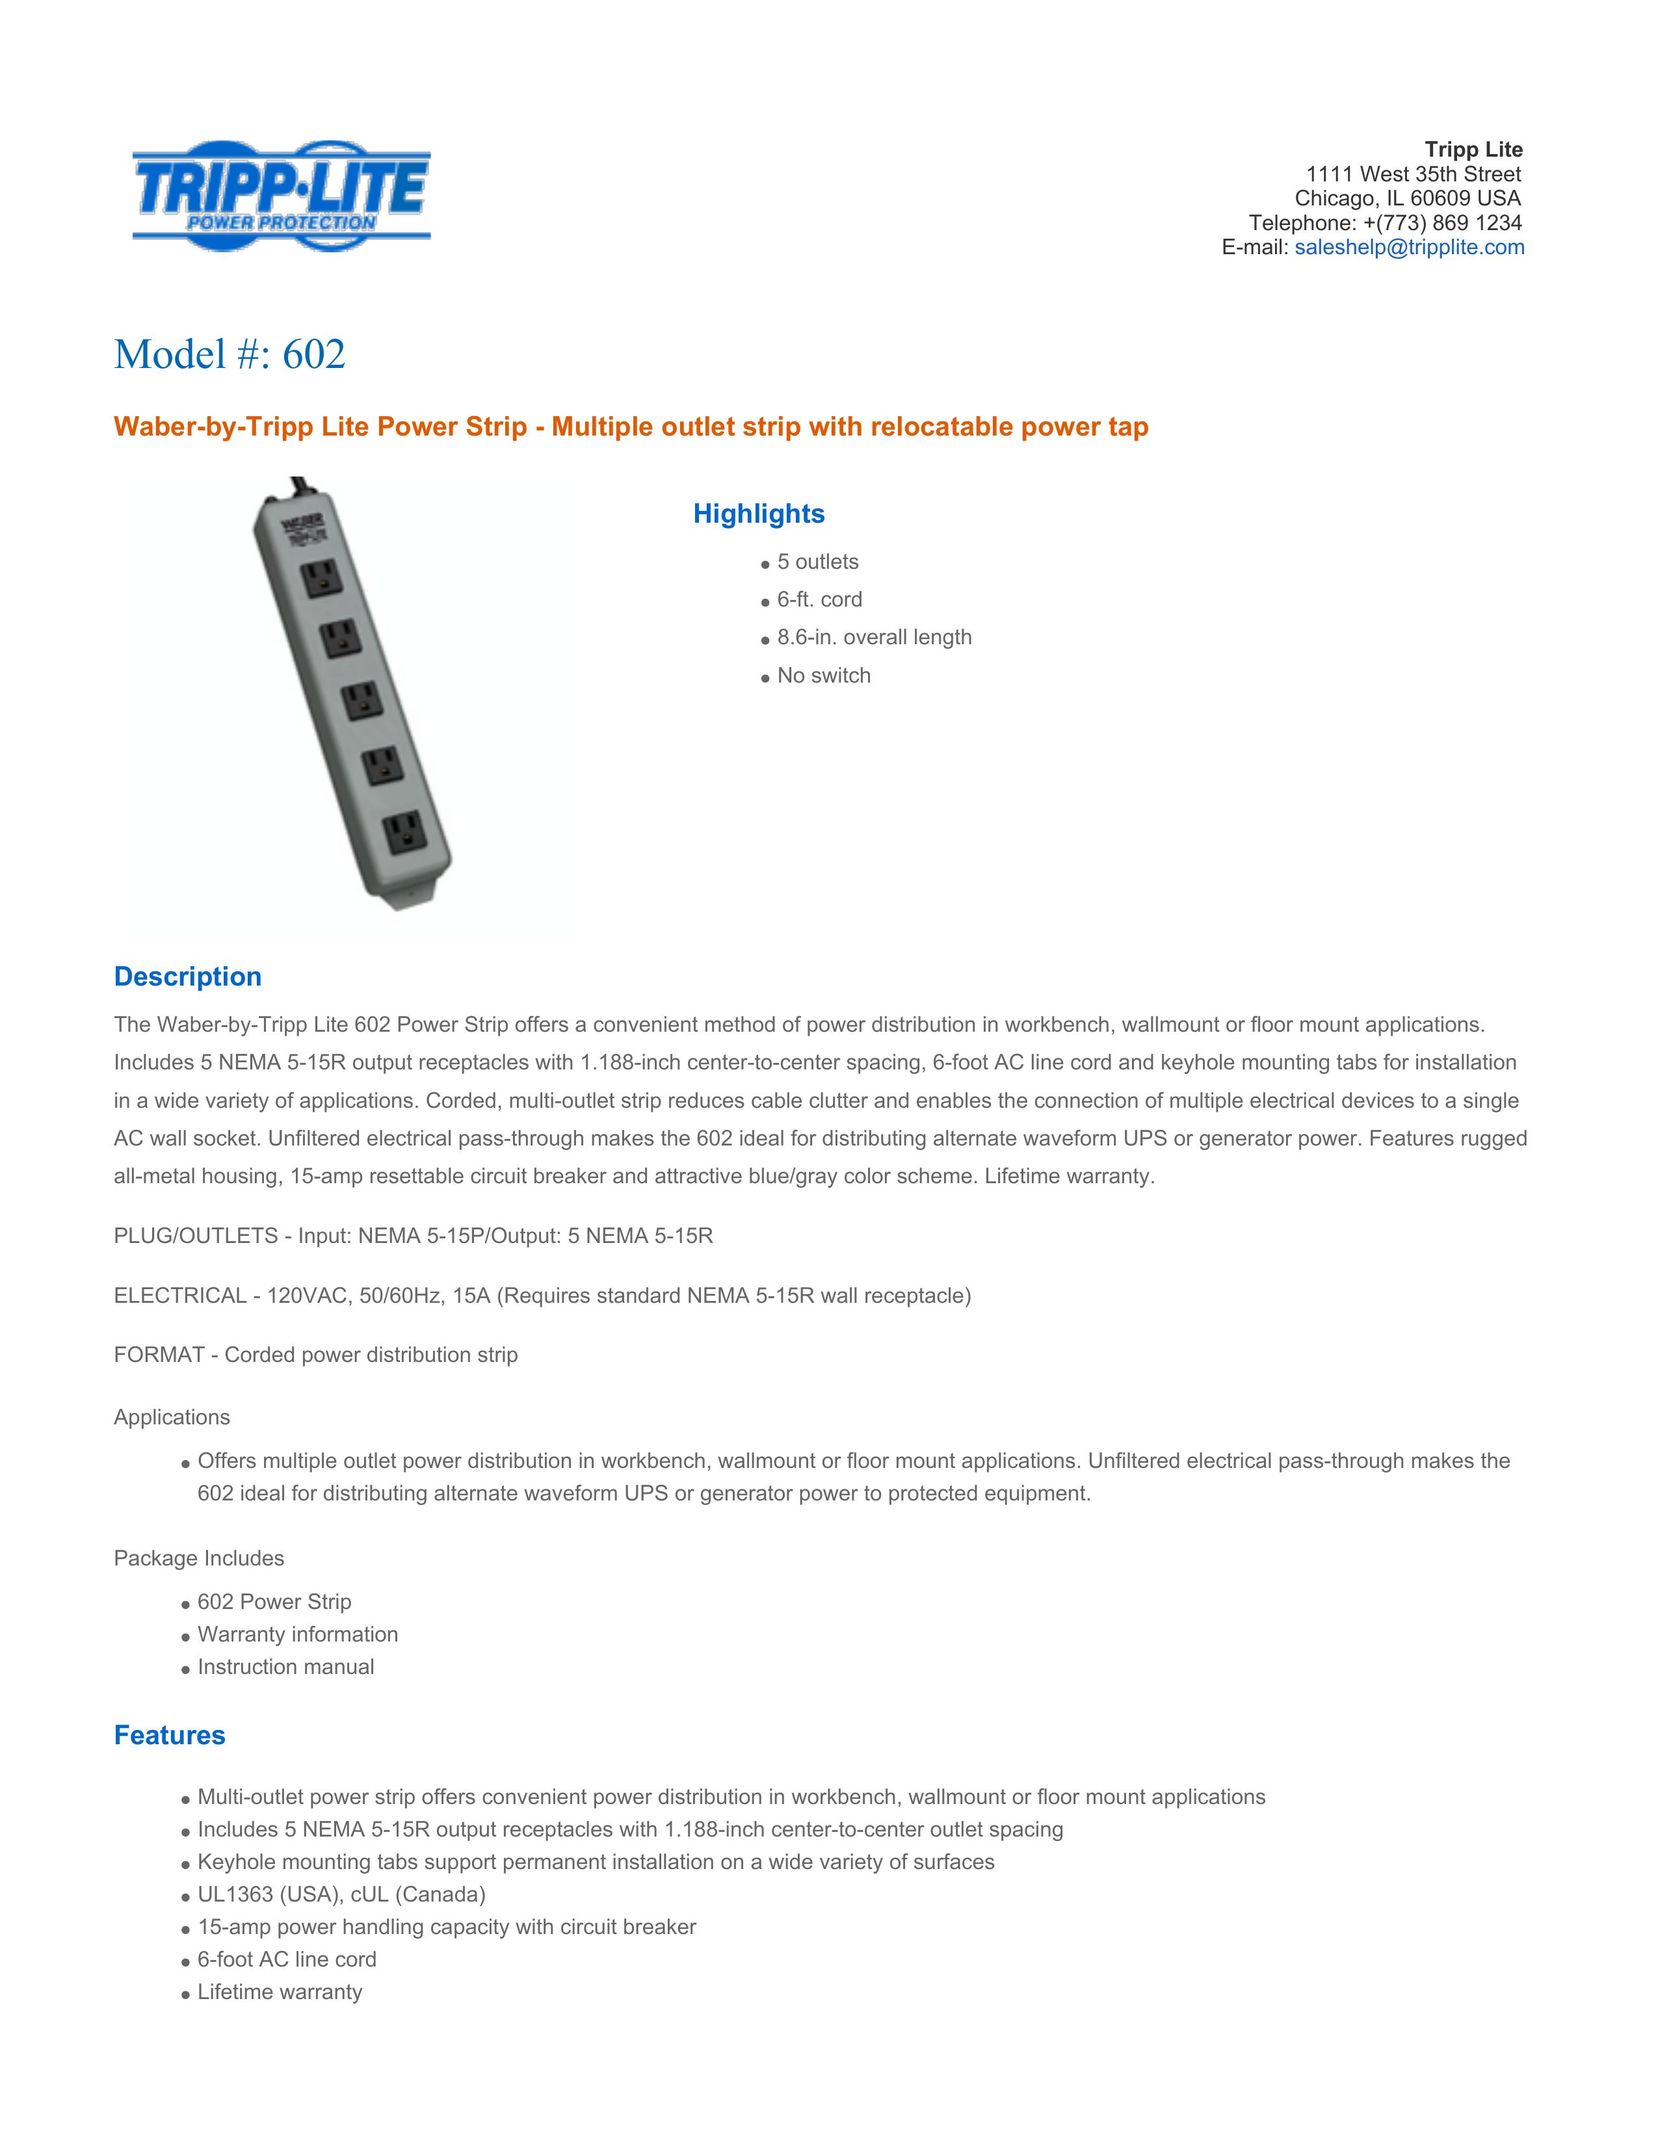 Tripp Lite 602 Surge Protector User Manual (Page 1)